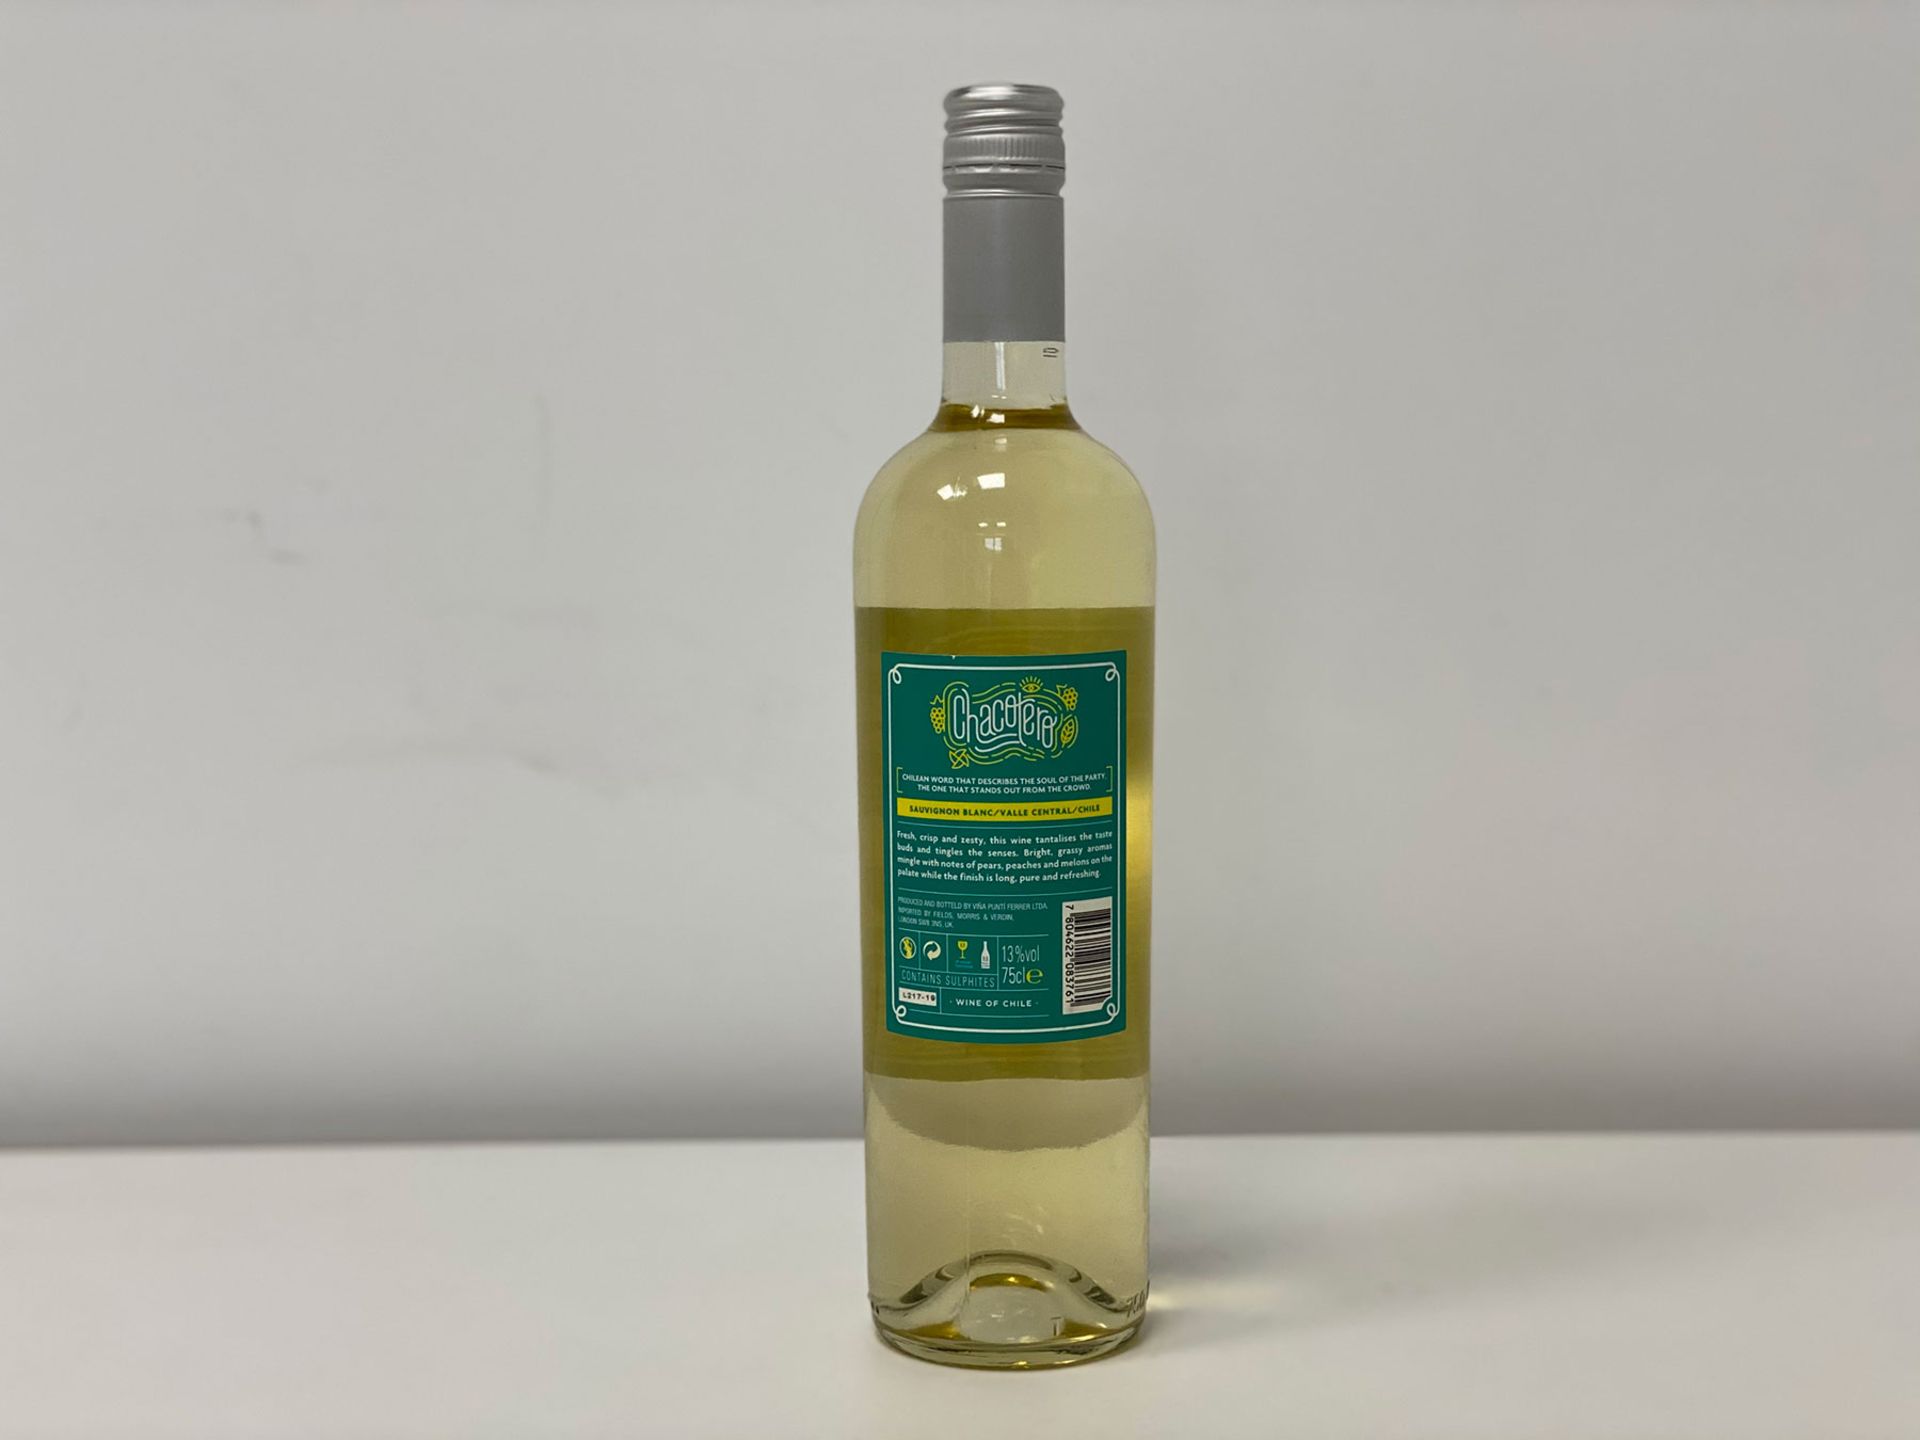 6 Bottles (1 Case) Punti Ferrer - Chacotero Sauvignon Blanc - Central Valley - Image 2 of 2